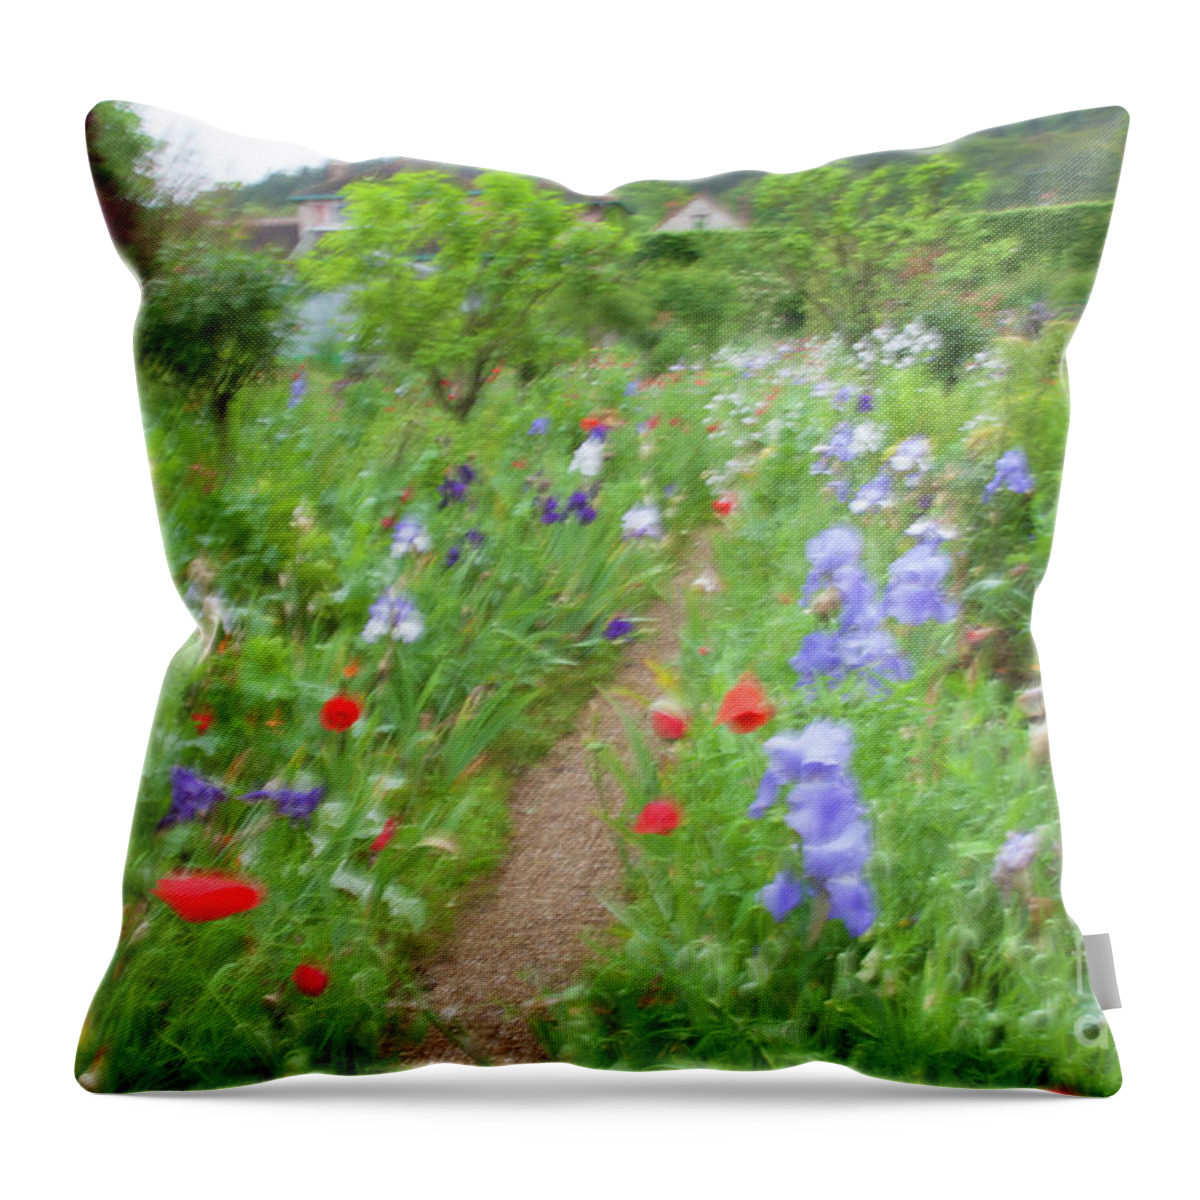 2016 Throw Pillow featuring the photograph Giverny Monet's Garden by Jean-Luc Baron